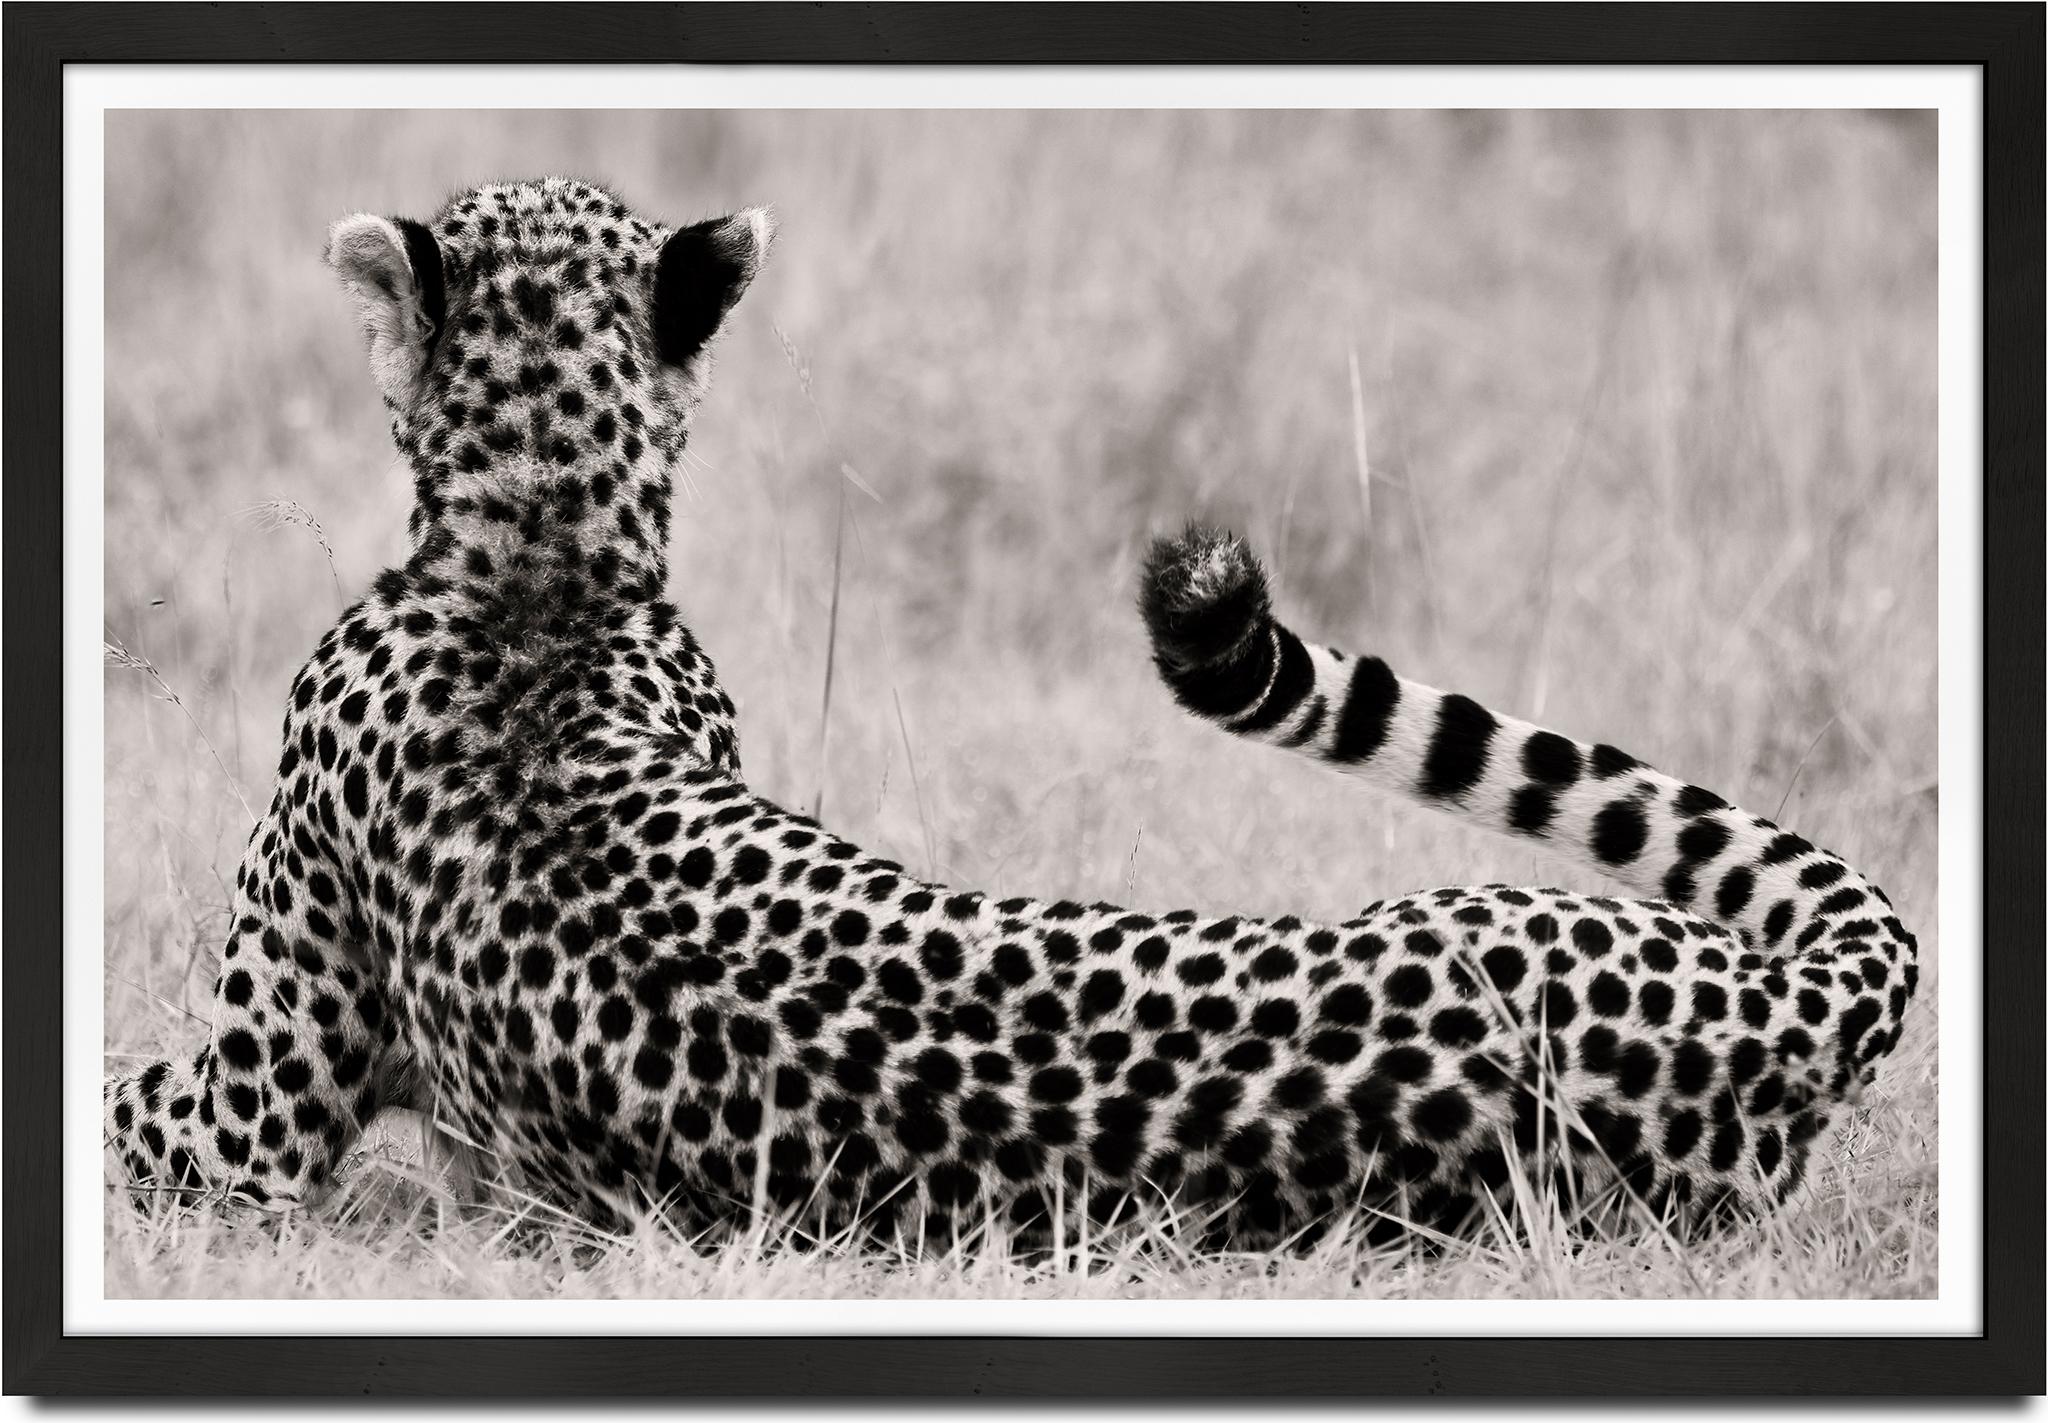 Joachim Schmeisser Portrait Photograph - The Divine, Cheetah, black and hwite photography, Africa, Portrait, Wildlife